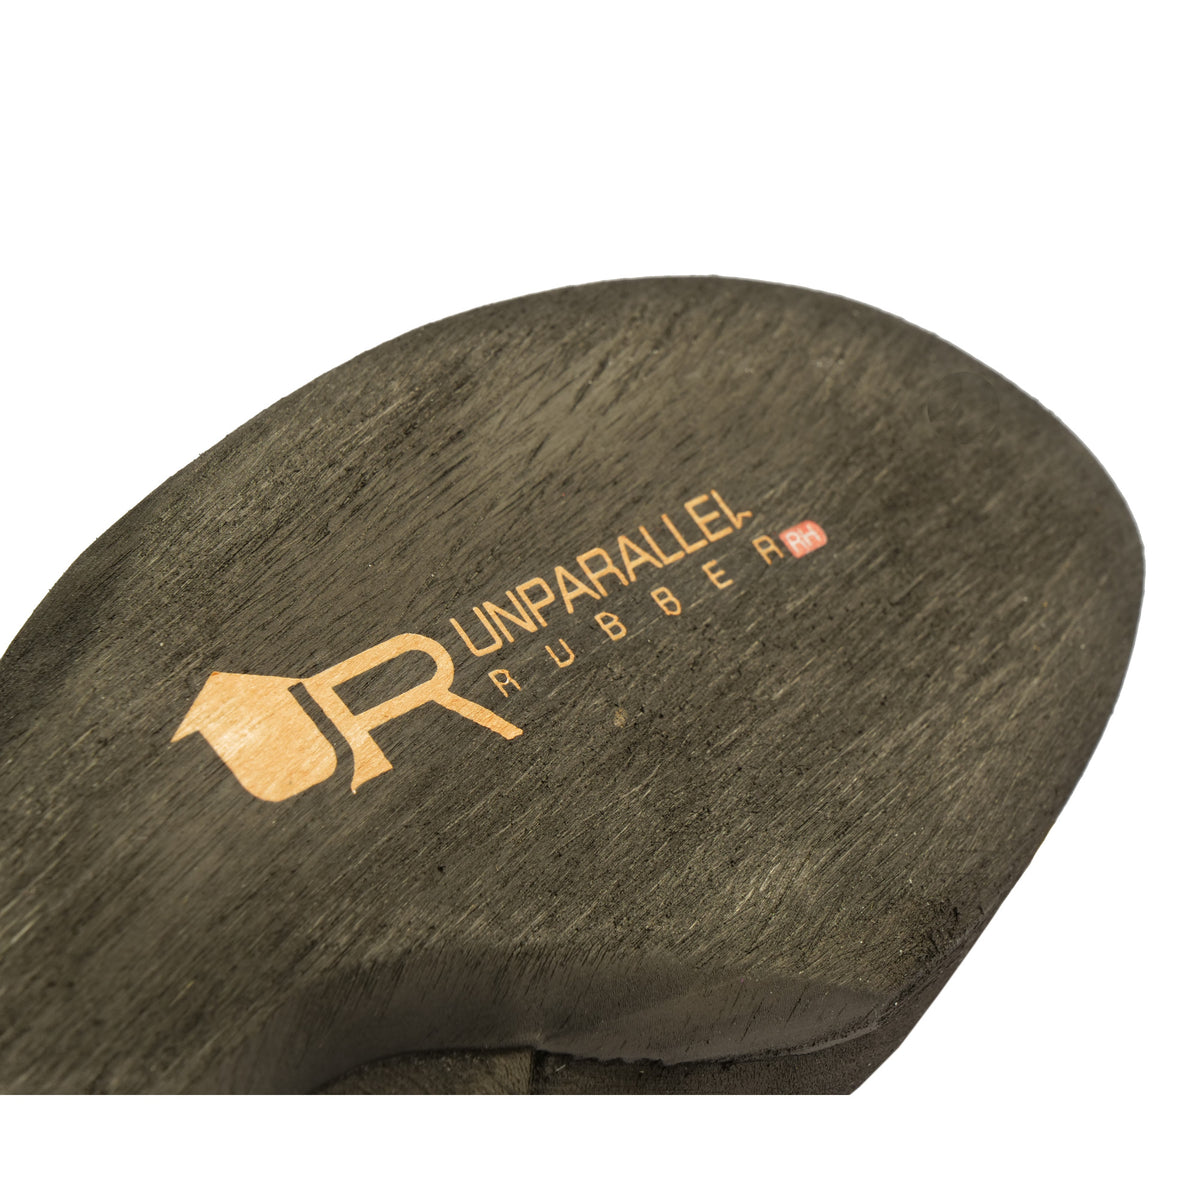 Unparallel RH Rubber sole in black with orange logo